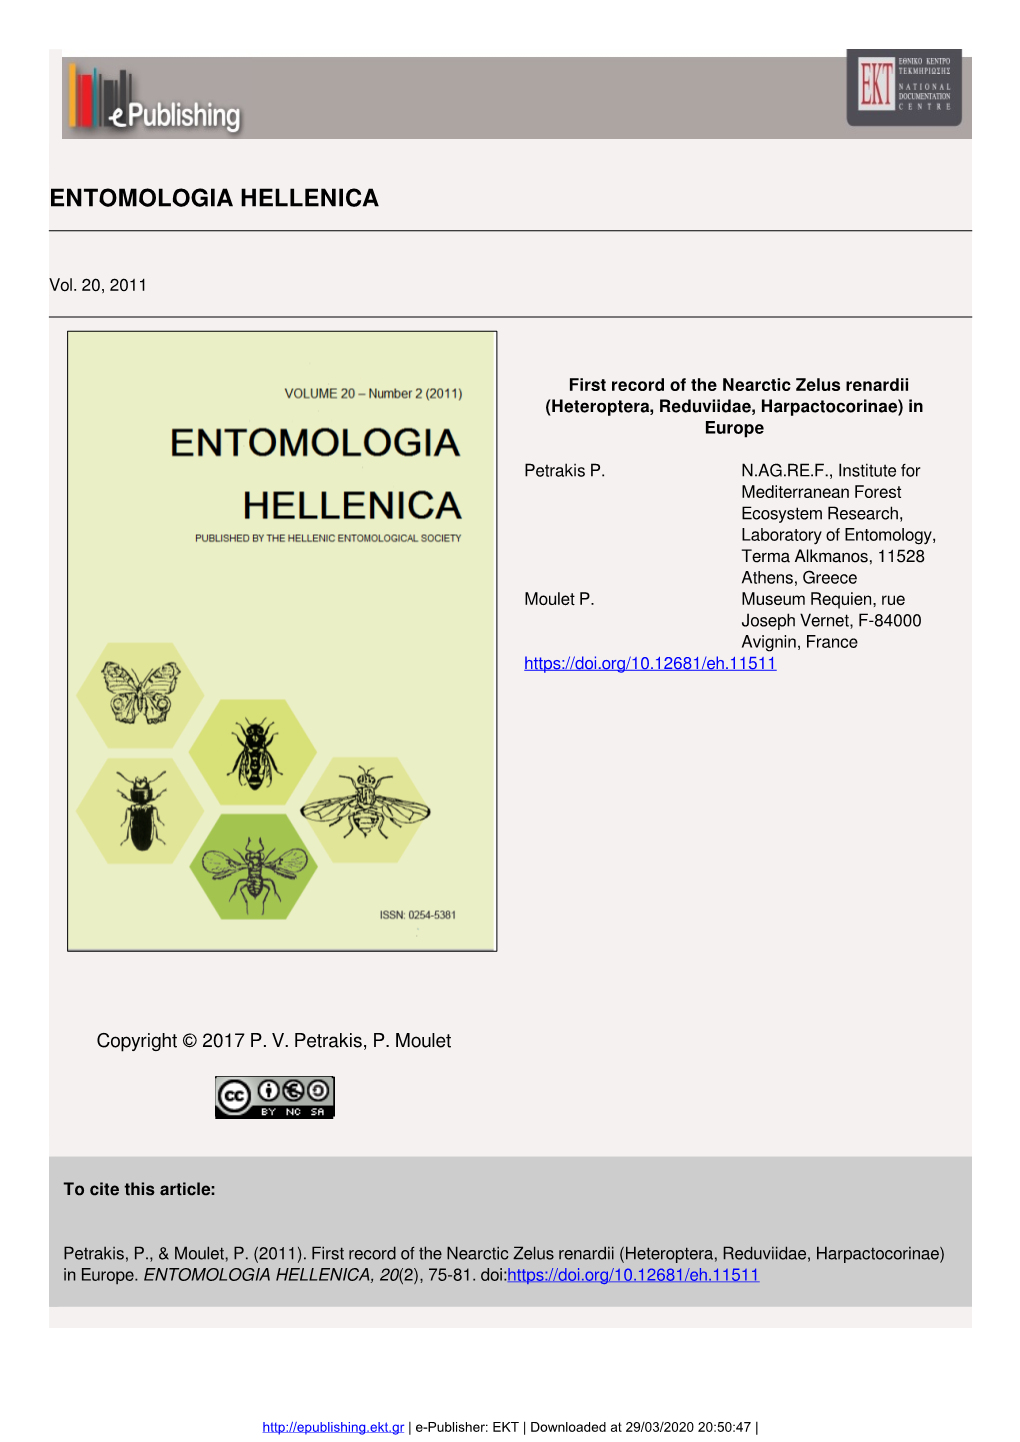 First Record of the Nearctic Zelus Renardii (Heteroptera, Reduviidae, Harpactocorinae) in Europe